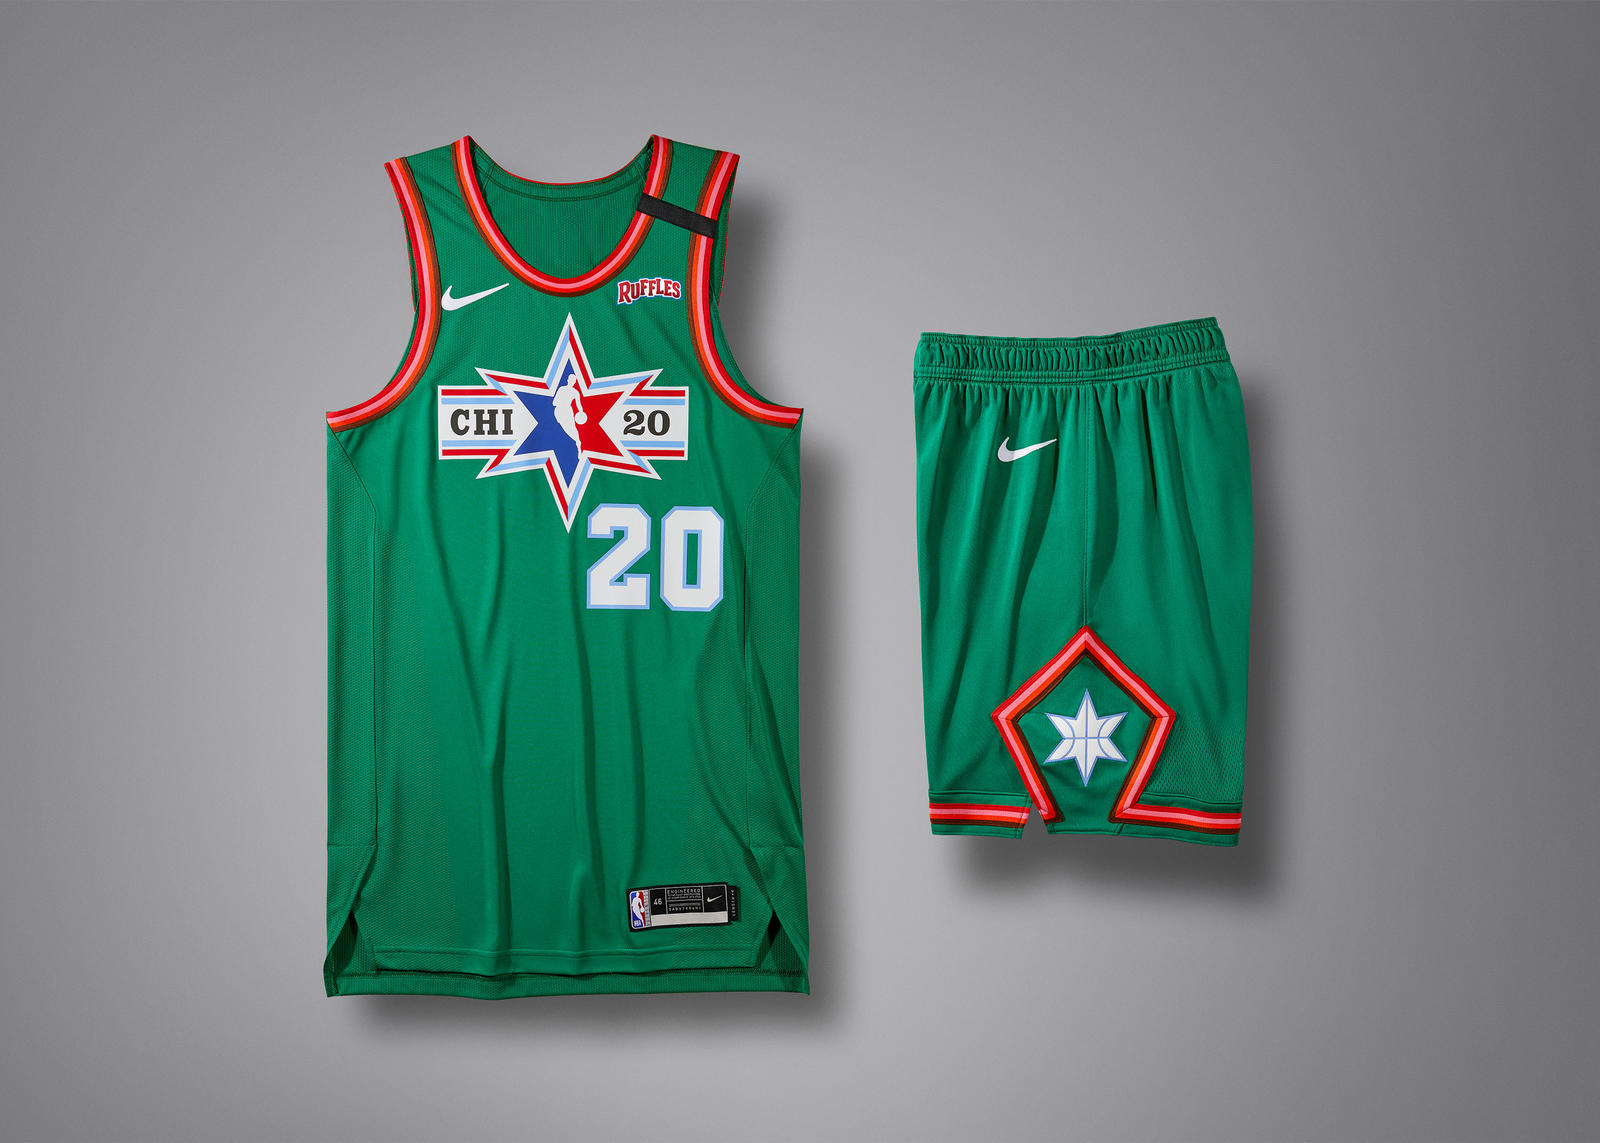 Nike and Jordan Brand Unveil NBA All-Star 2020 Uniforms